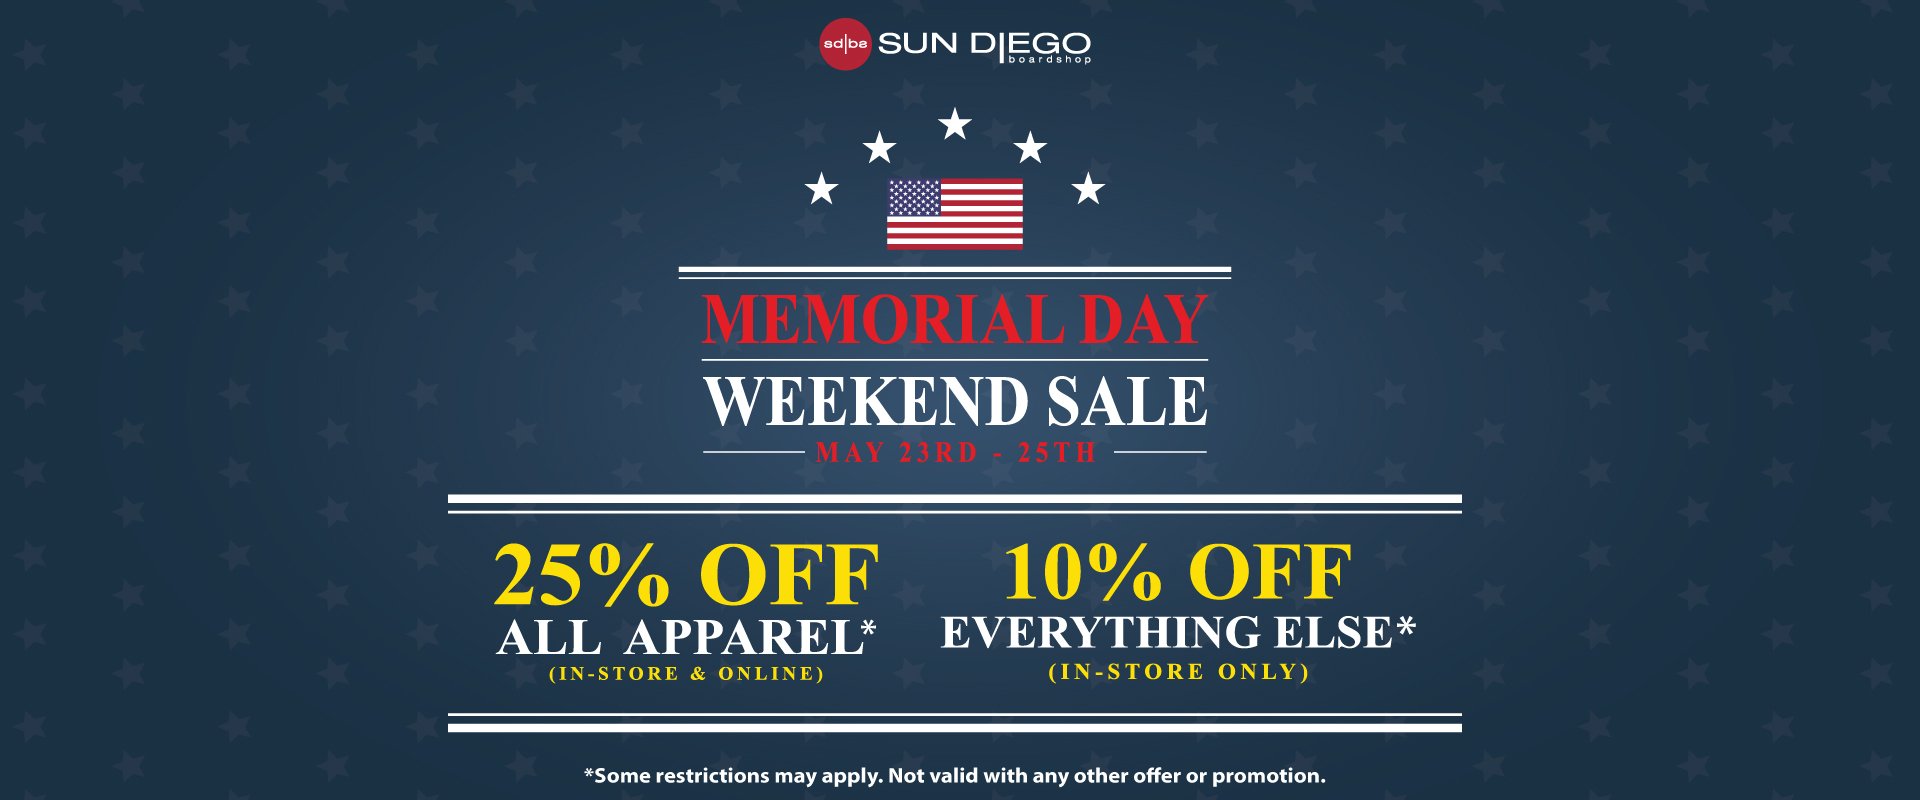 Sun Diego Memorial Day Weekend Sale